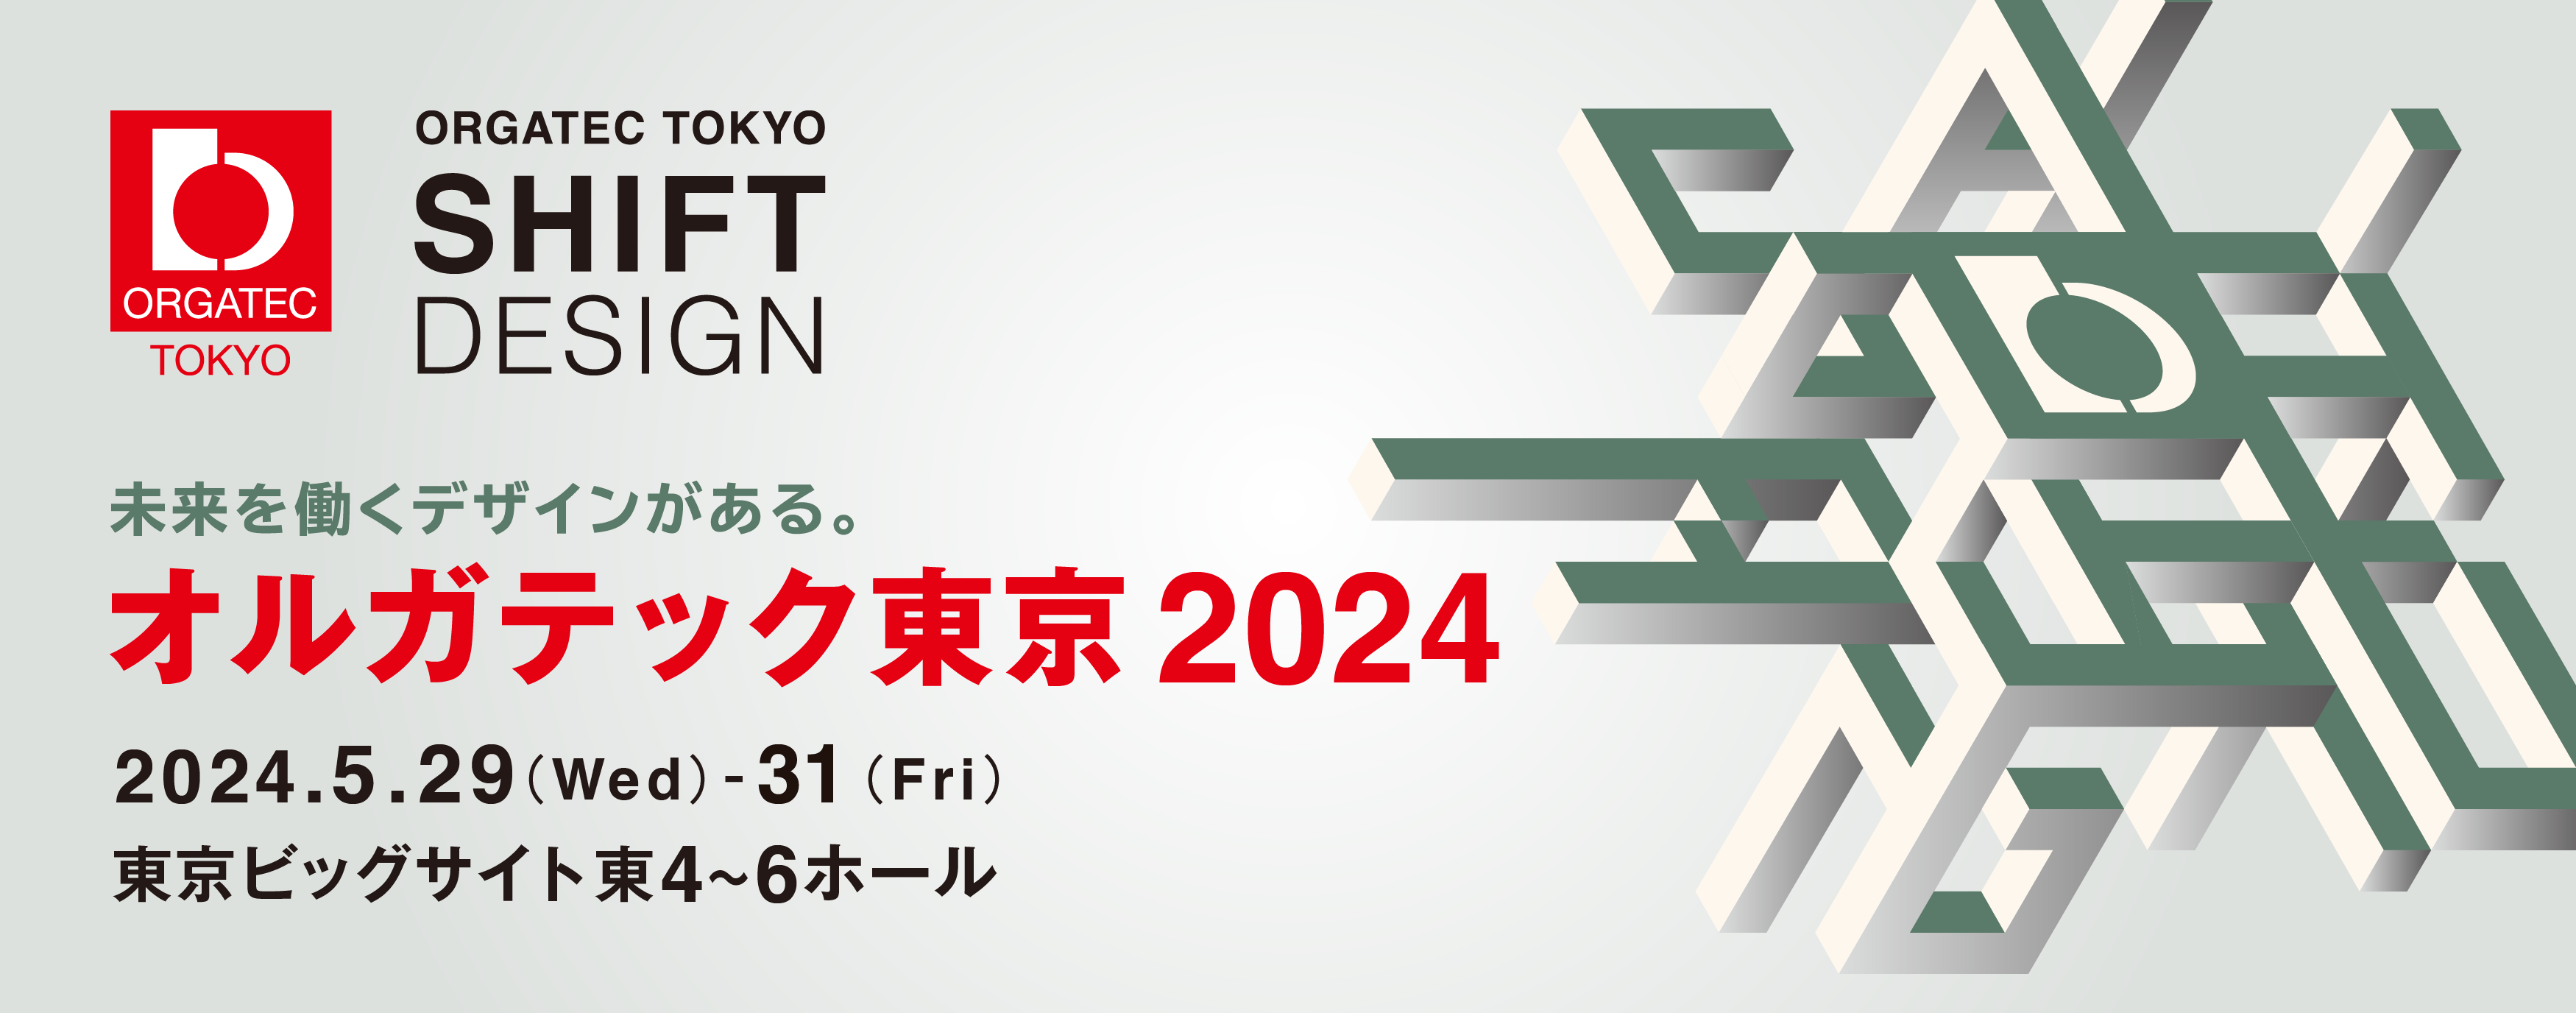 Orgatec Tokyo 2024 images